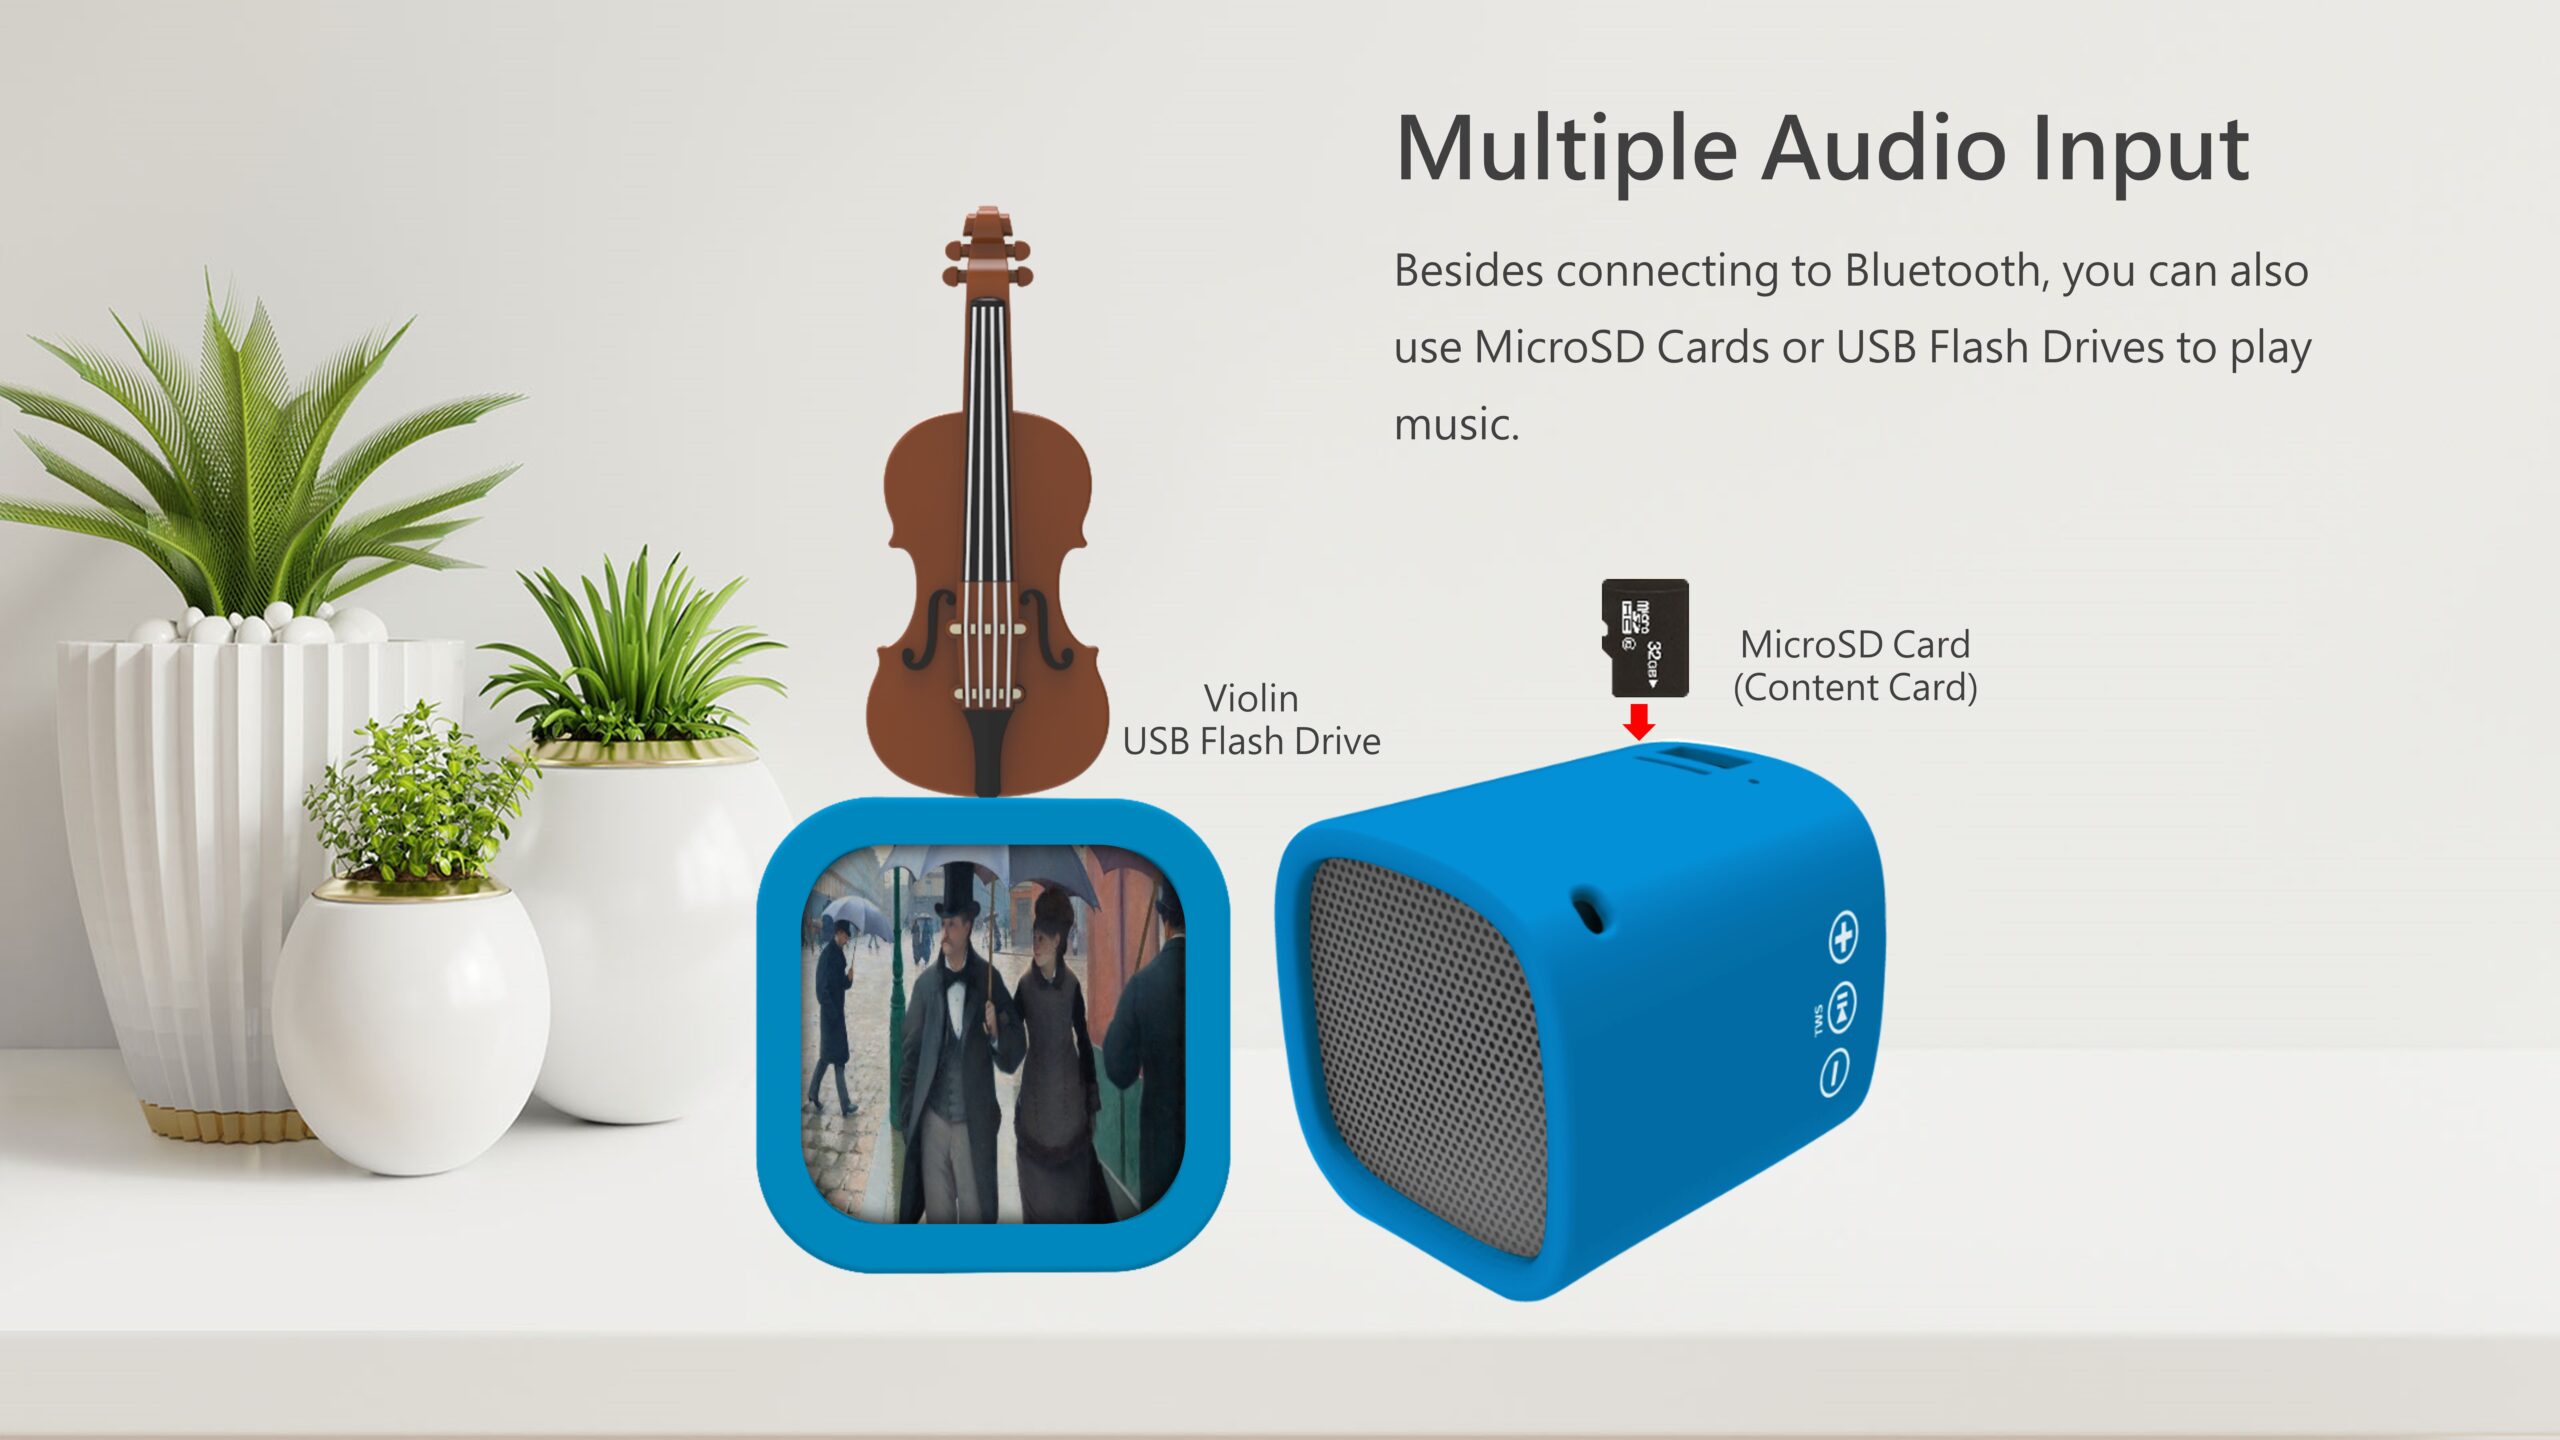 Jukebox Air Bluetooth MP3 Player